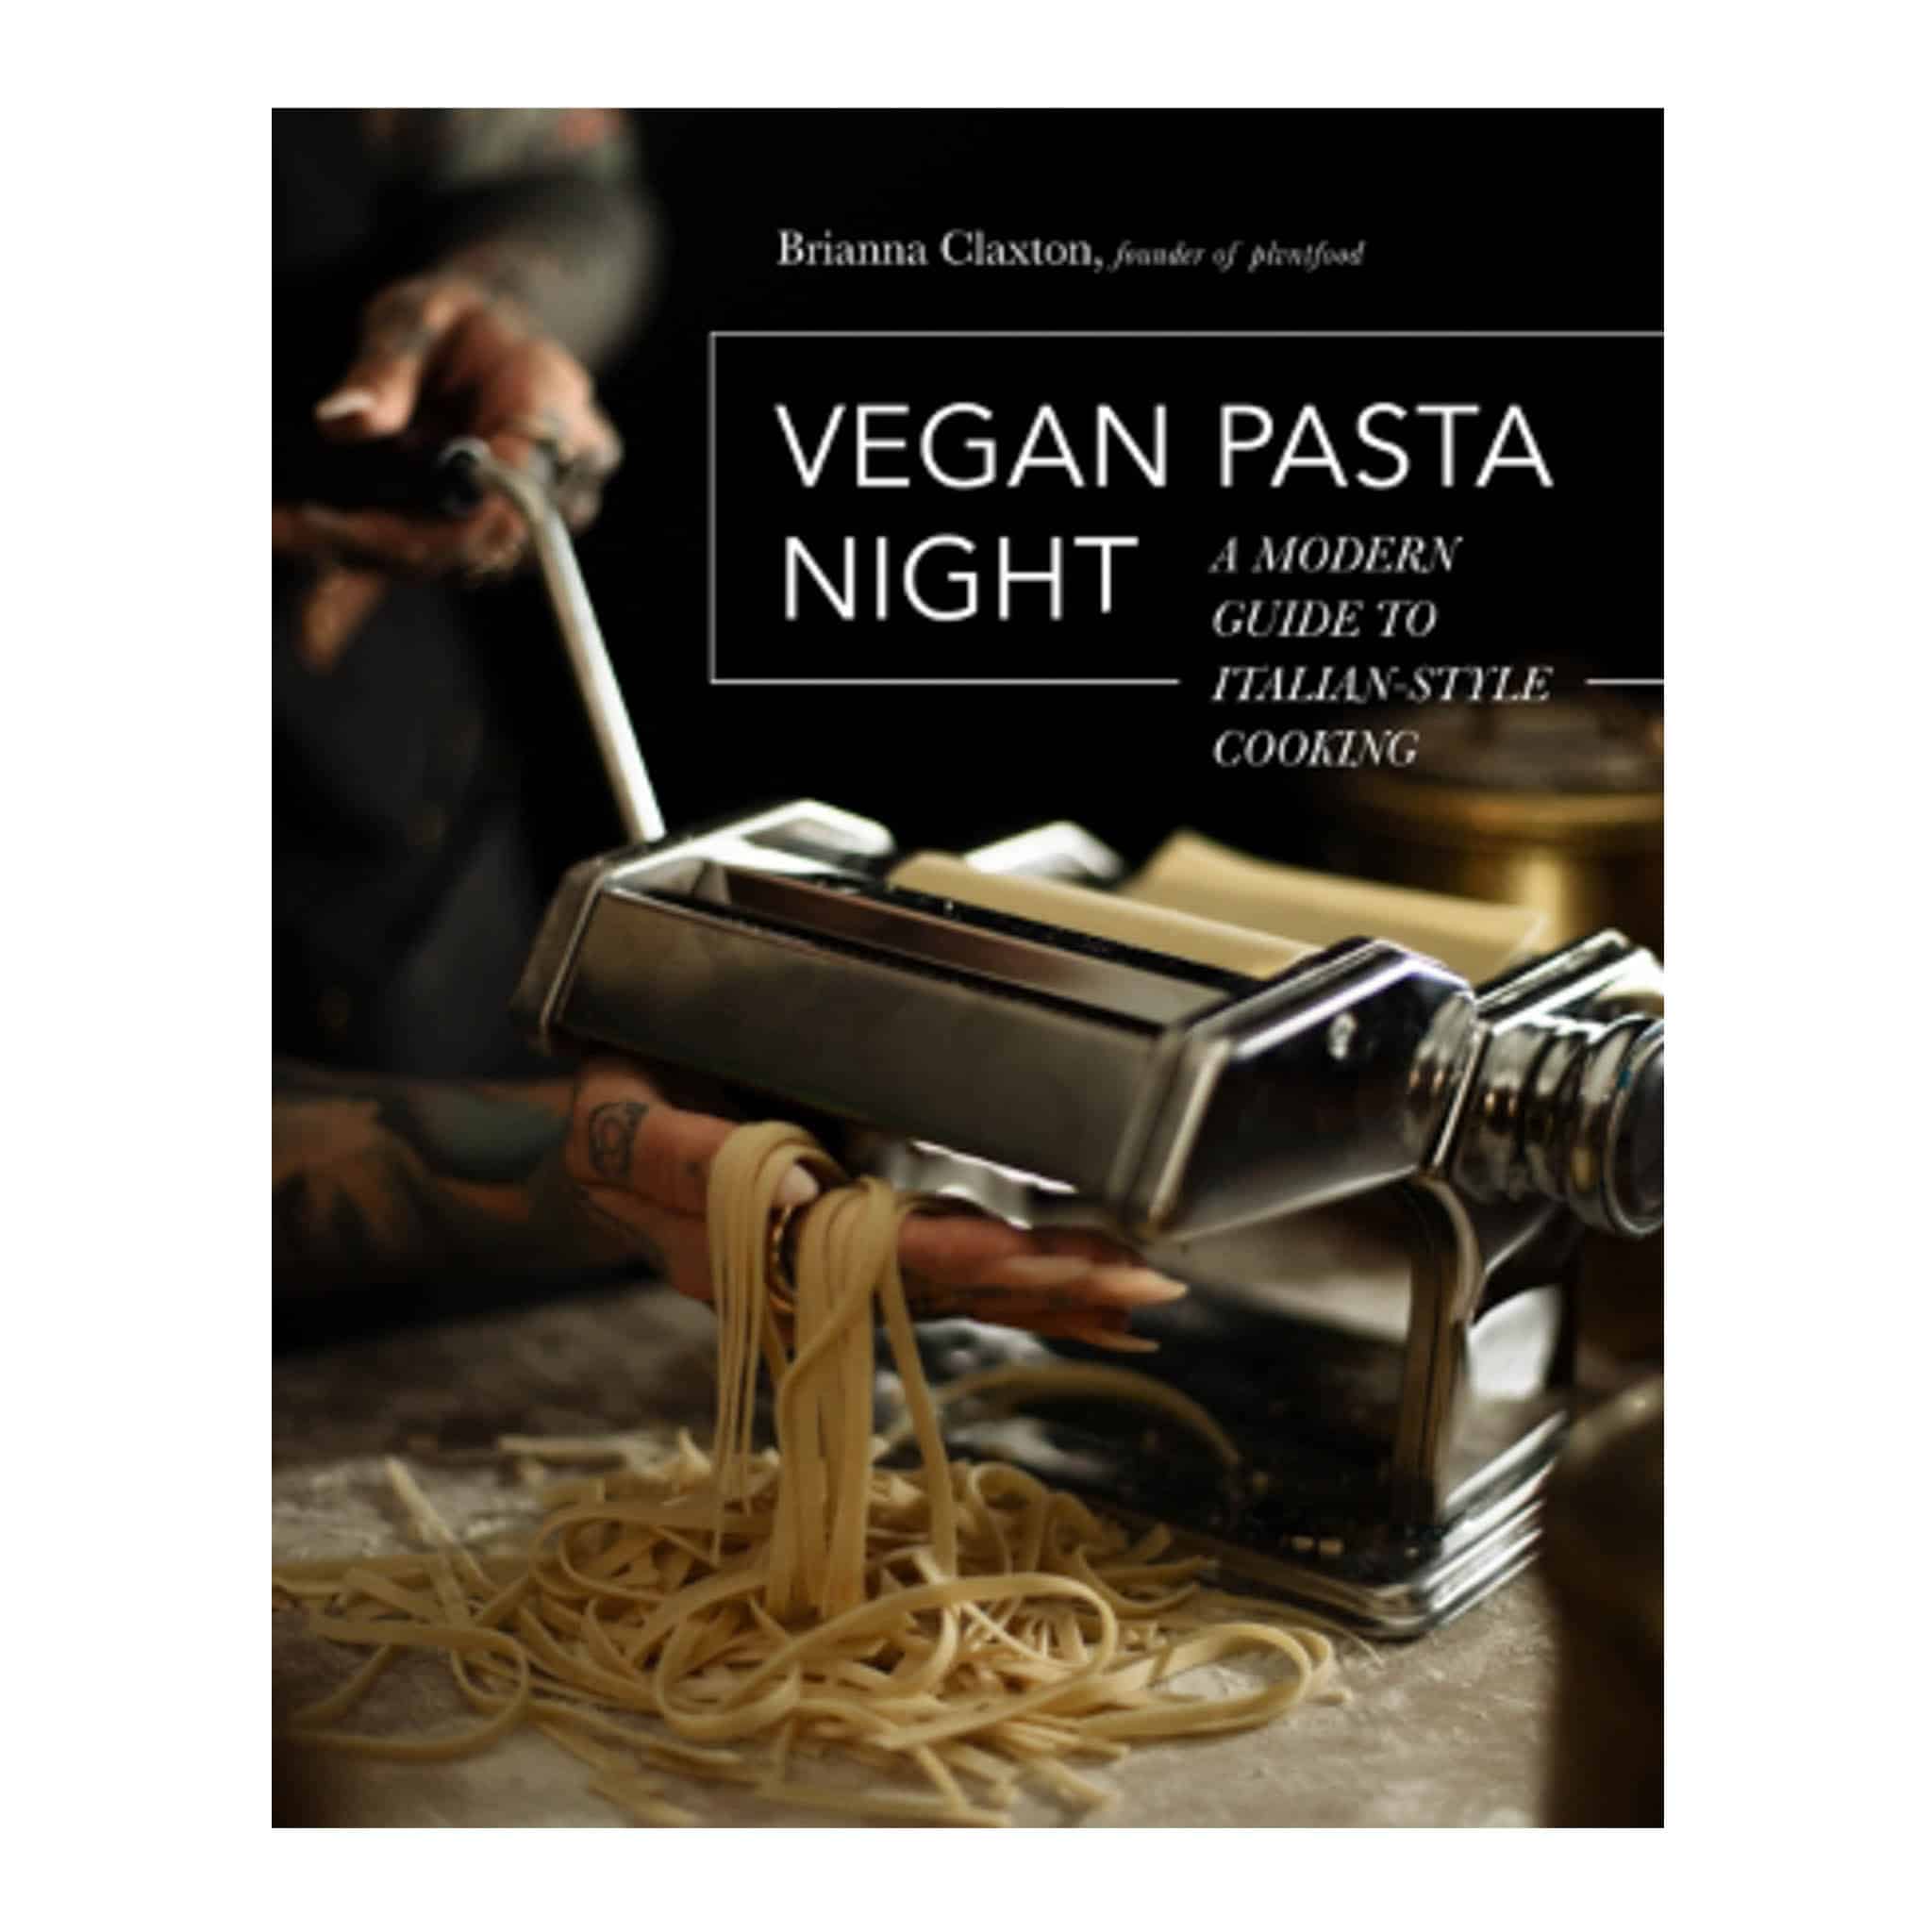 Vegan Pasta Night, by Brianna Claxton